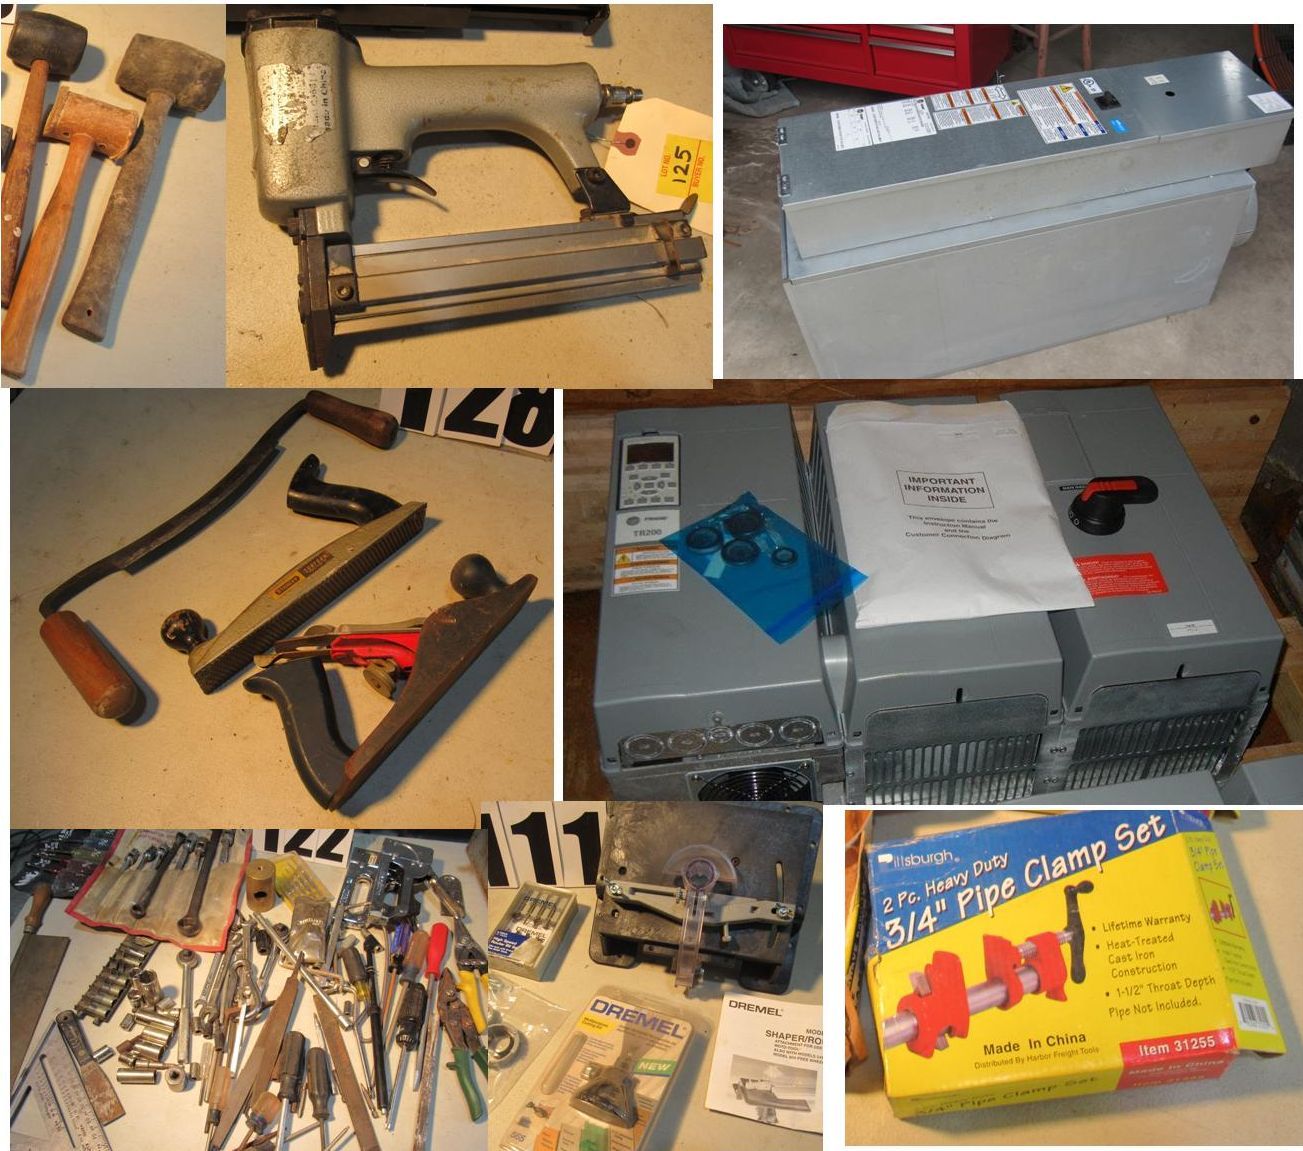 HVAC Equipment, Tools, Hardware